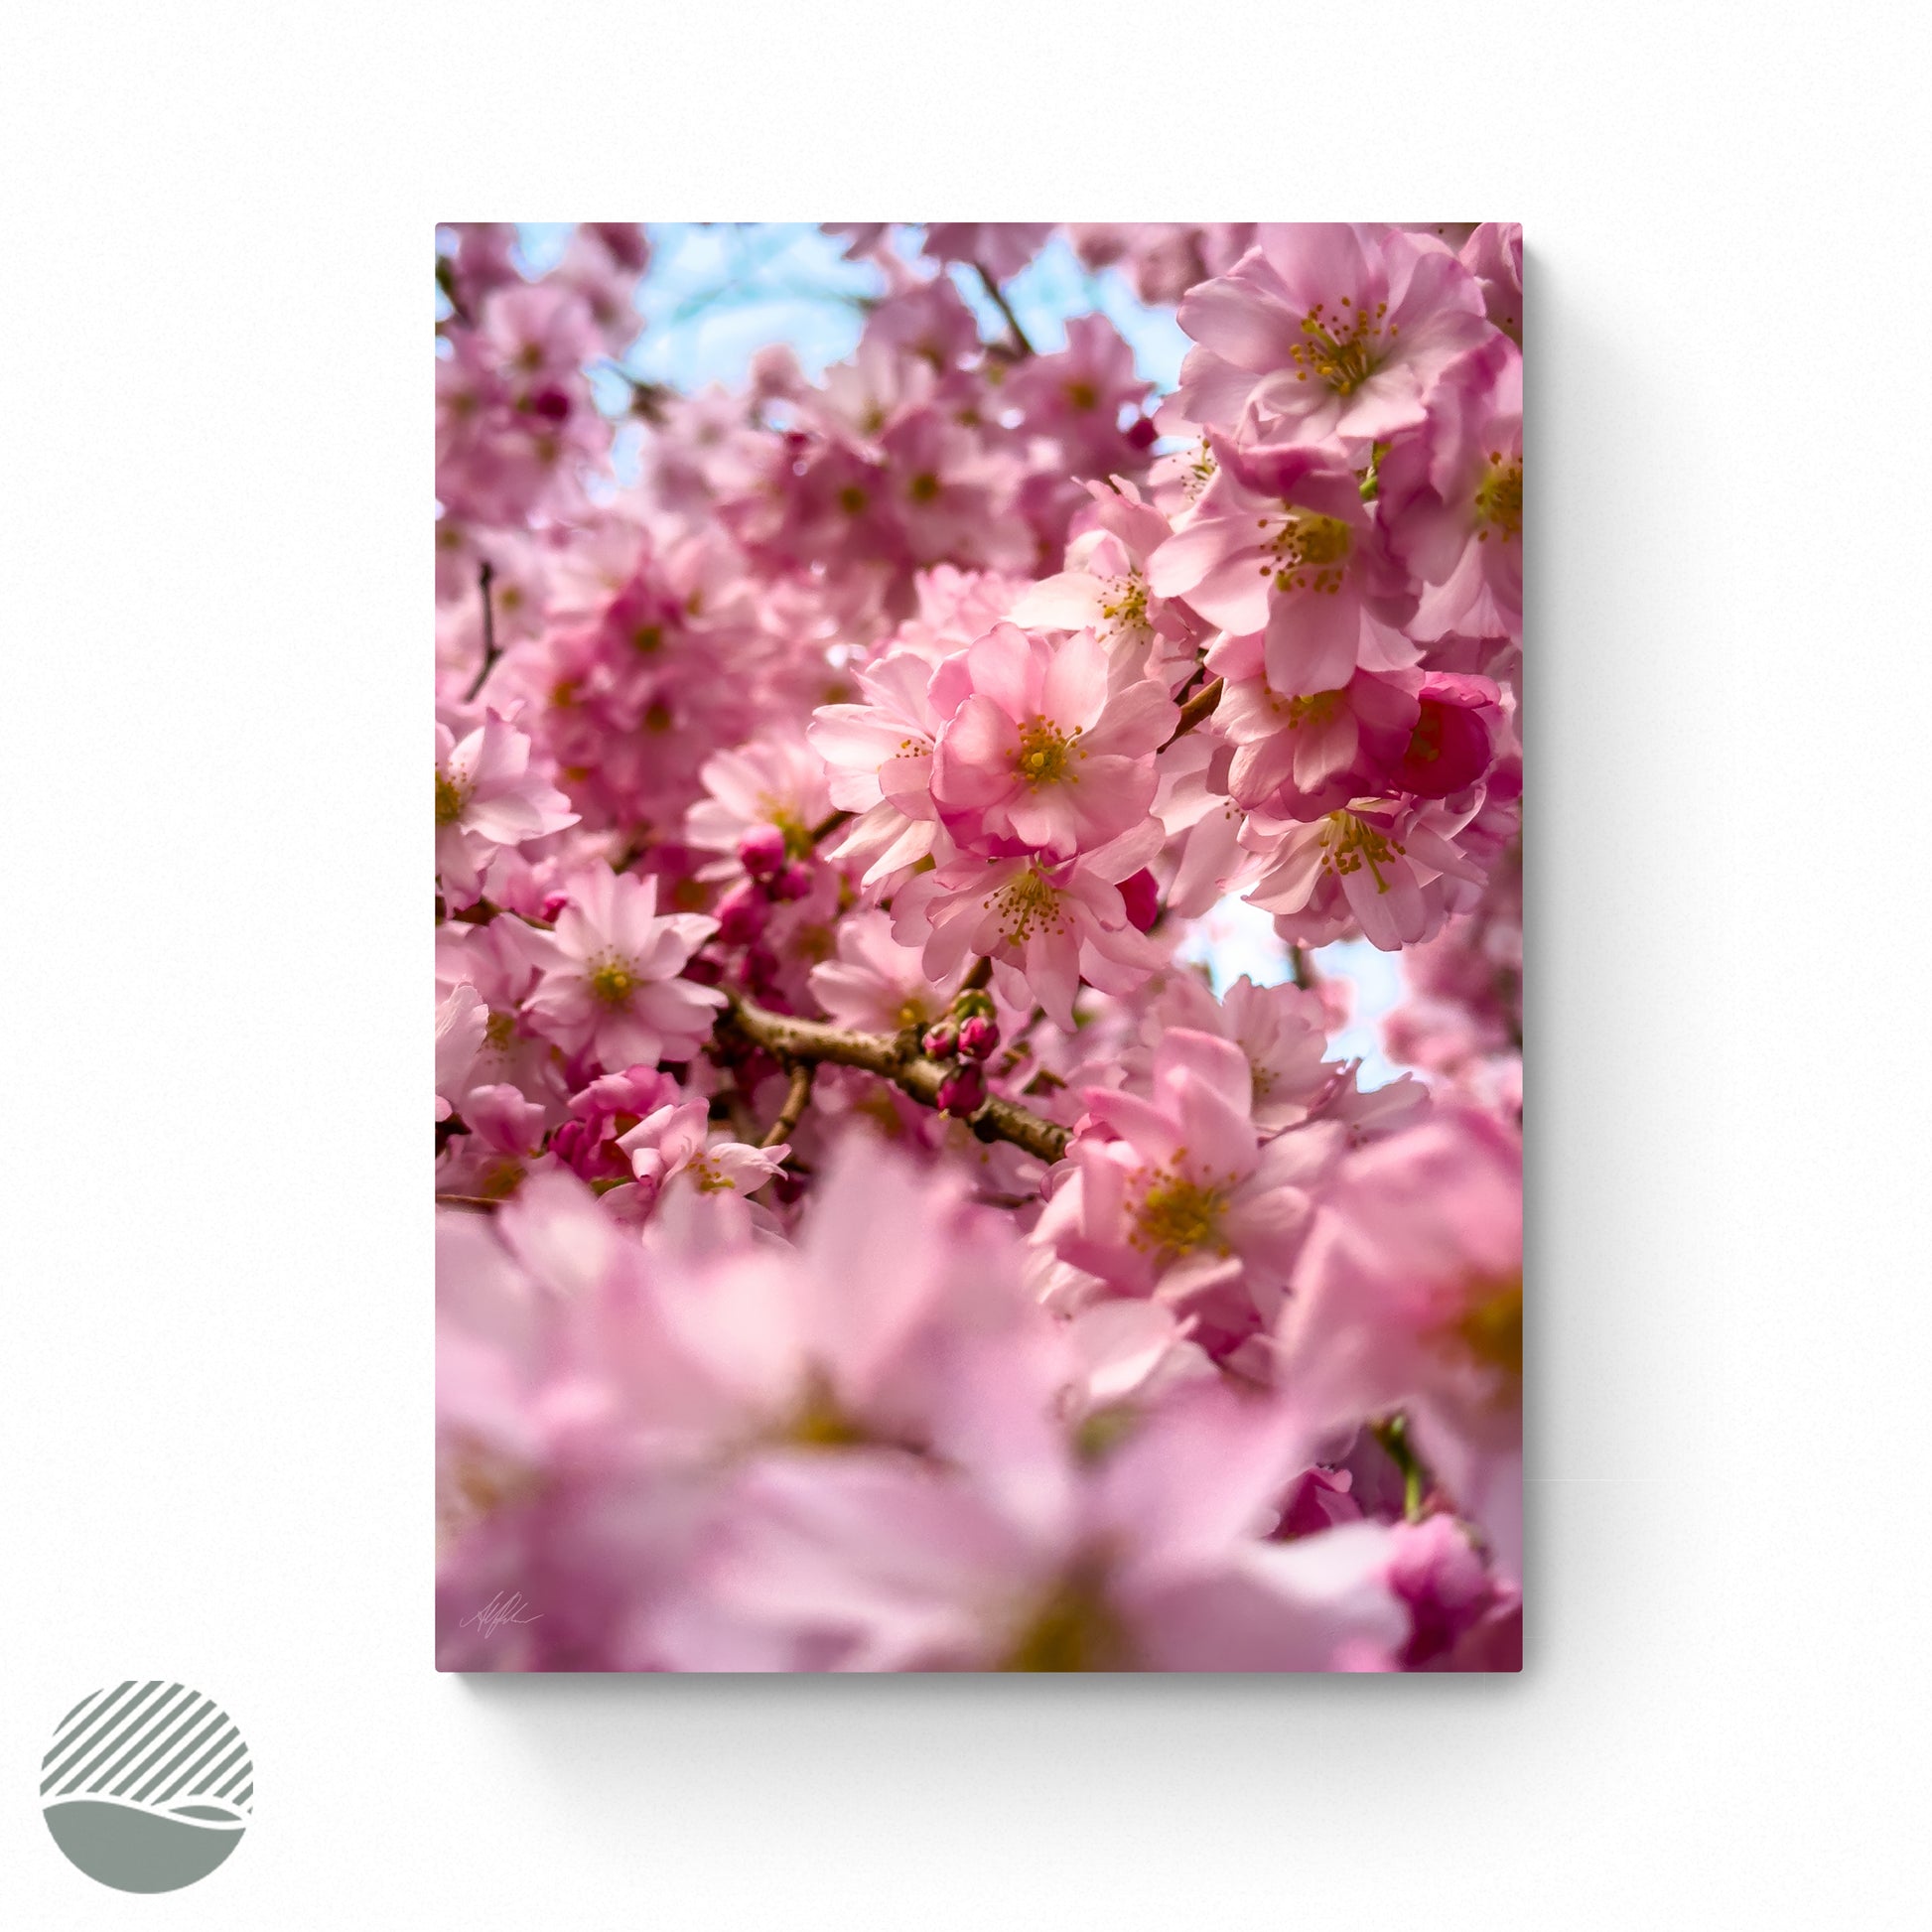 Sakura - In the flower crowd photo print by Alantherock - 80cmx60cm 